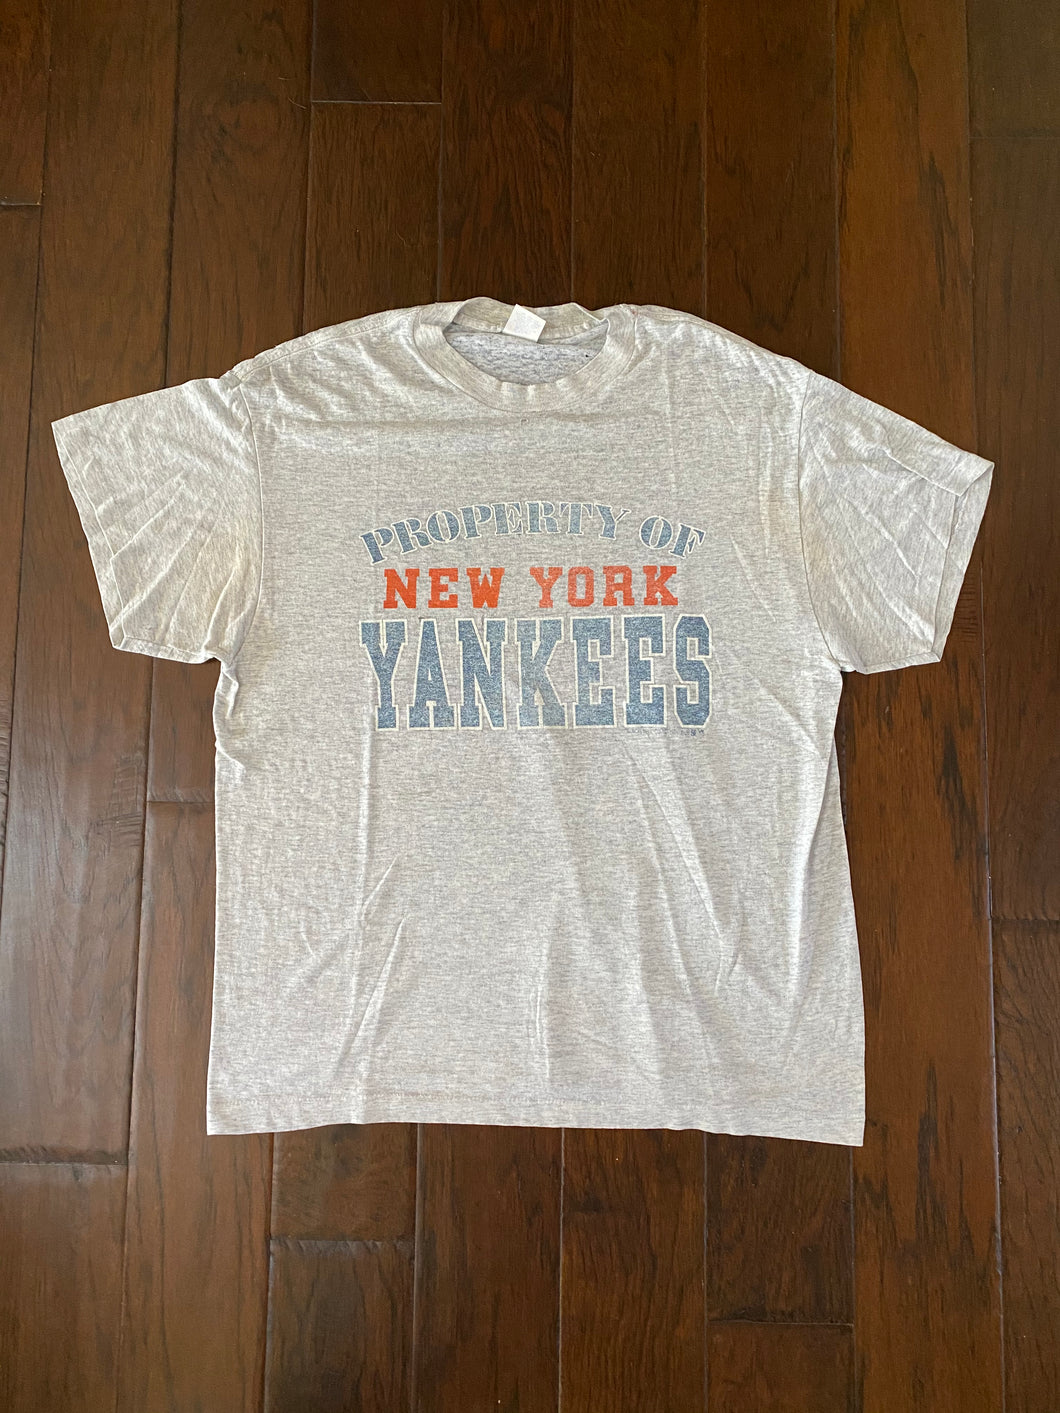 New York Yankees 1991 Vintage Distressed T-shirt